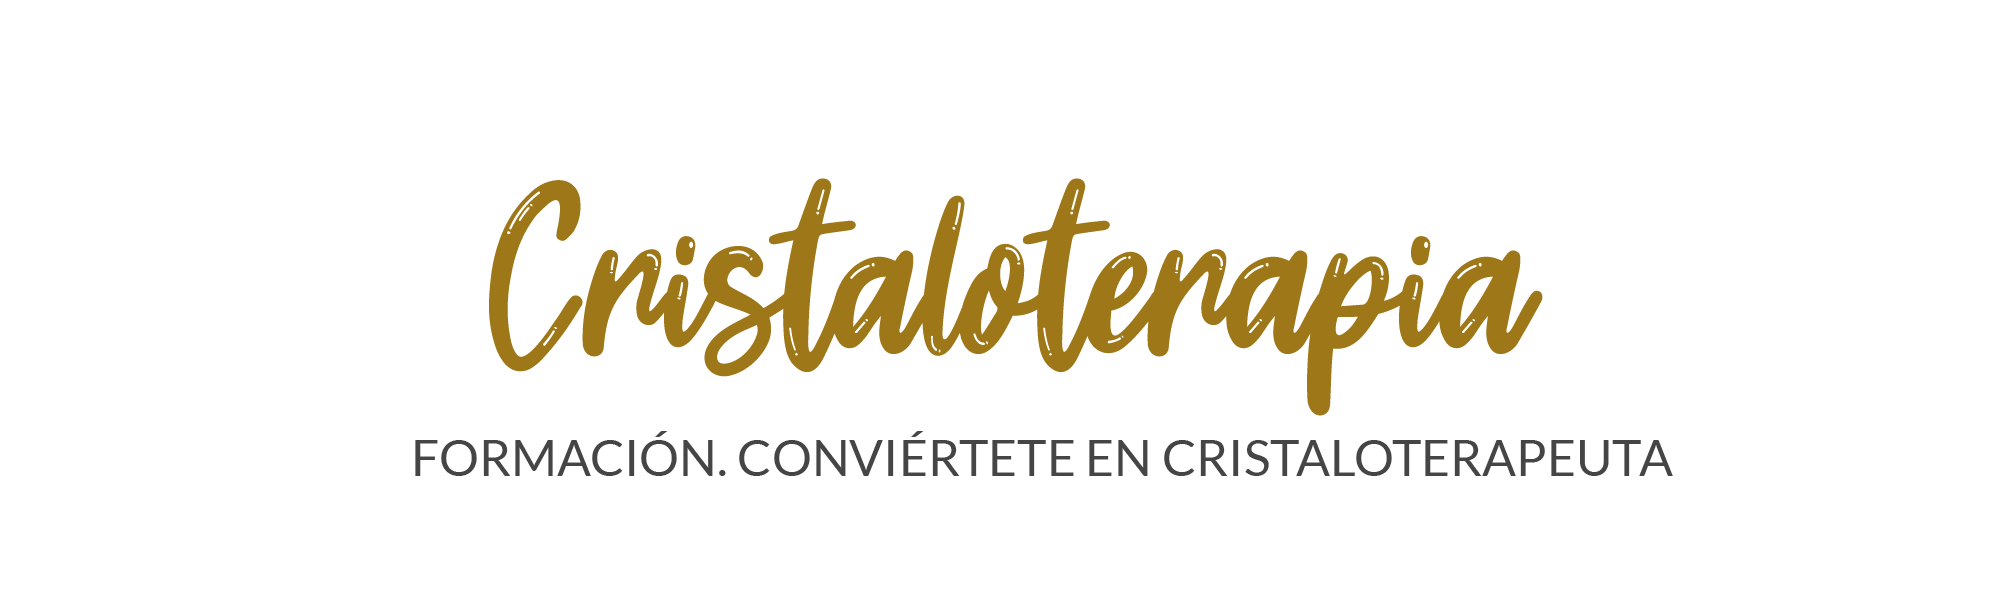 Cristaloterapia logo